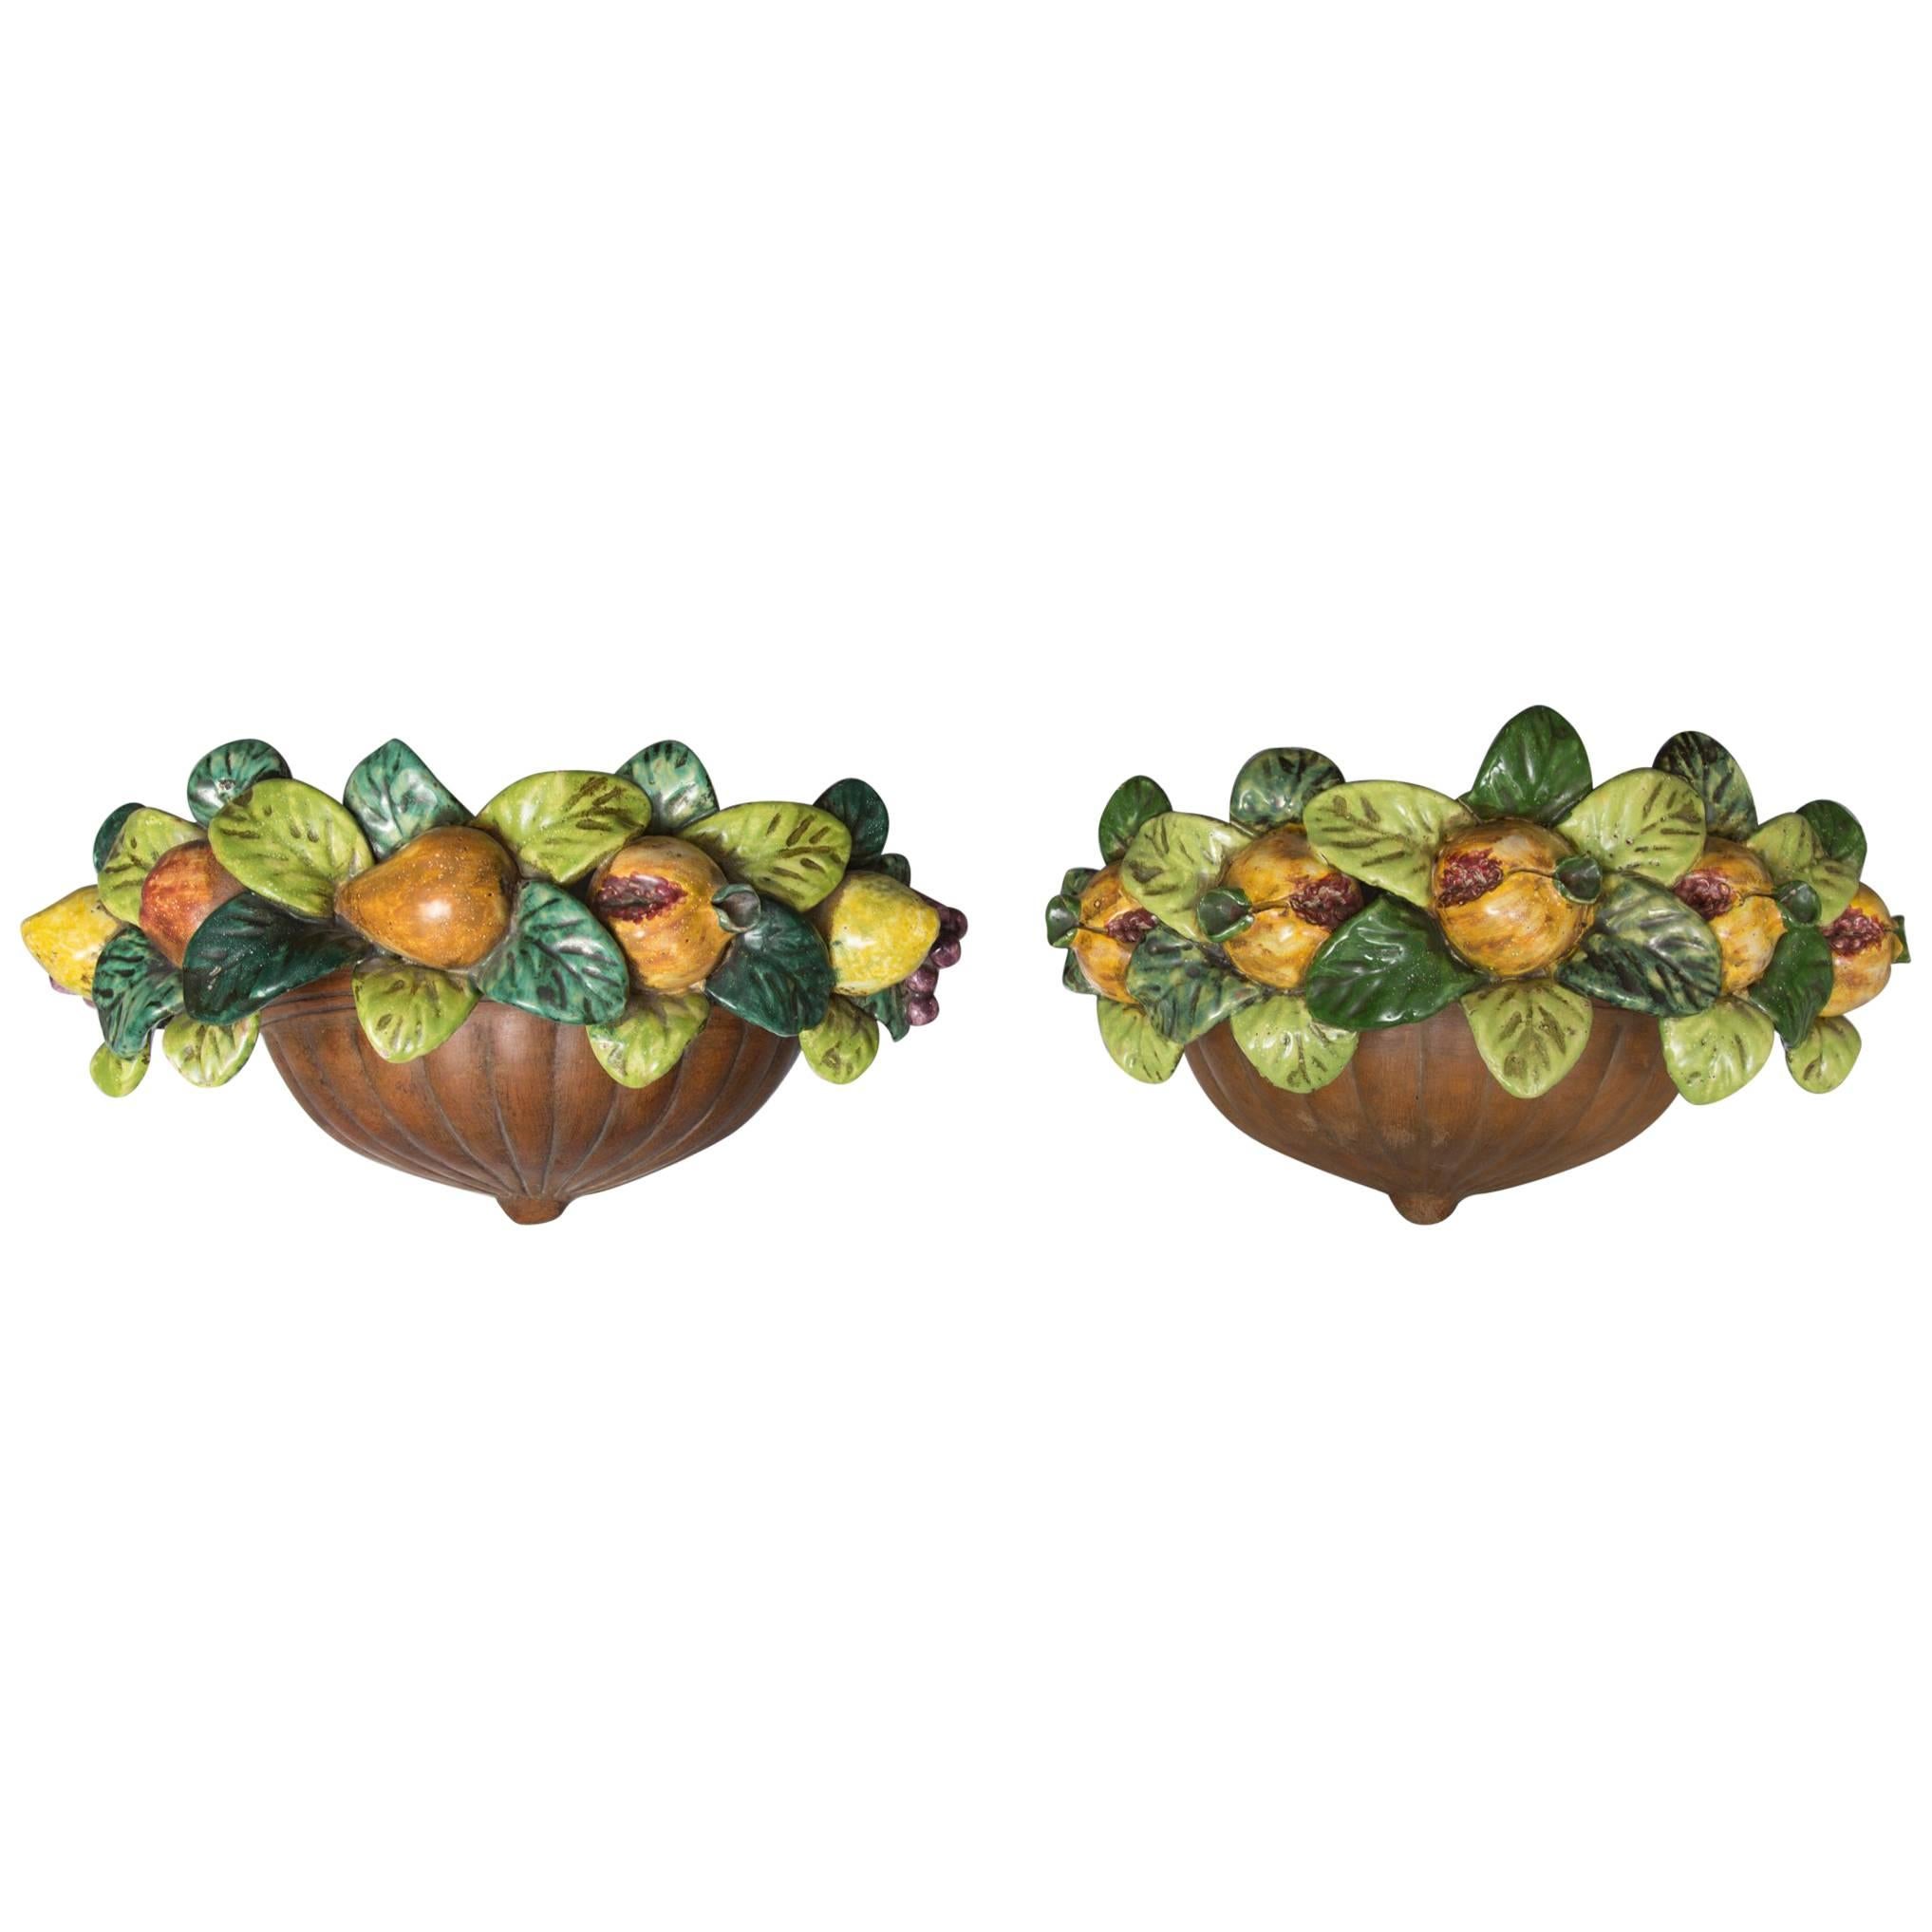 Pair of Italian Terracotta Wall Pockets with  Glazed Fruit Decoration 